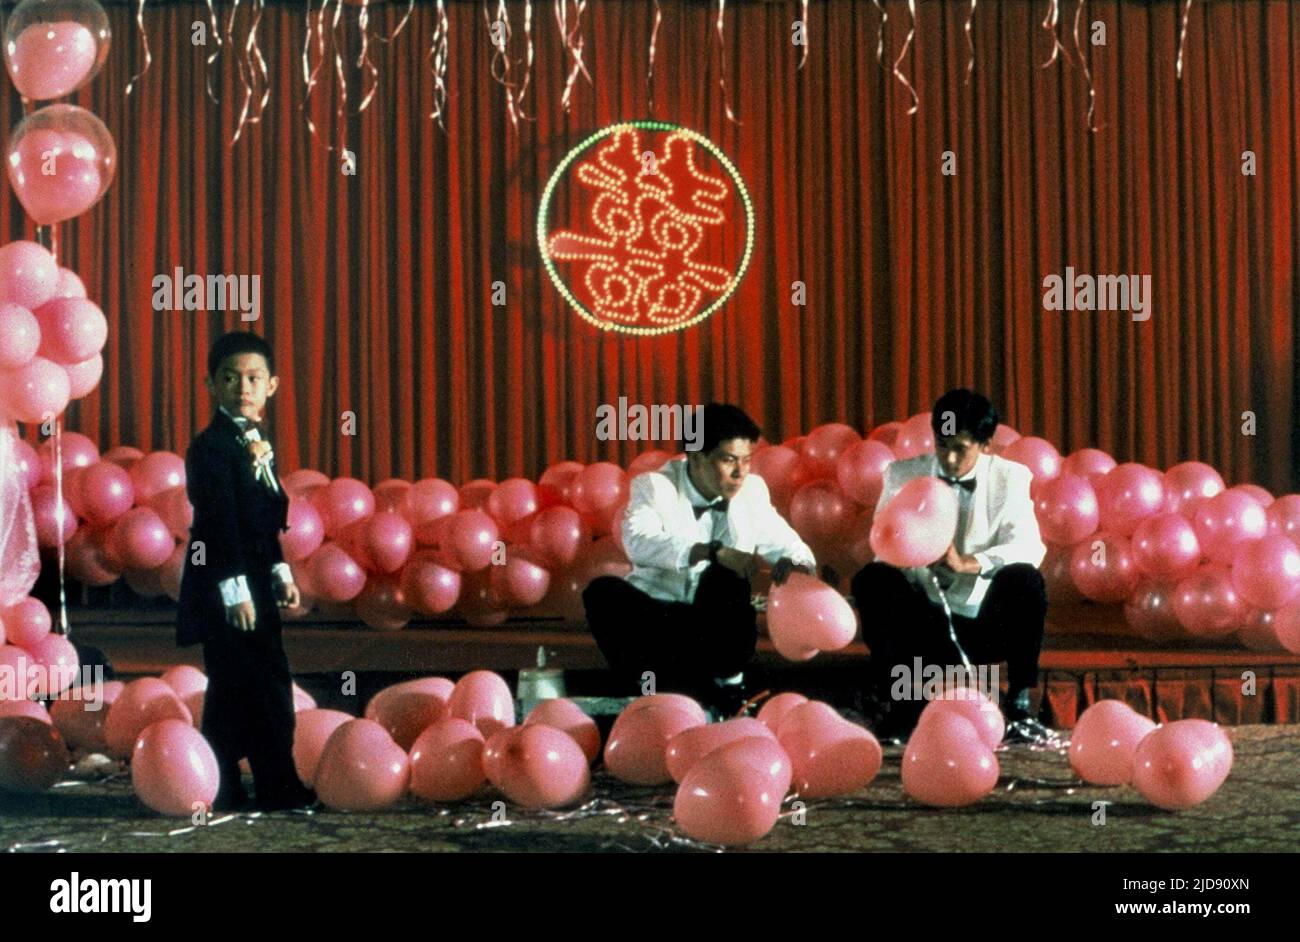 JONATHAN CHANG, YI YI (EIN UND ZWEI), 2000, Stockfoto